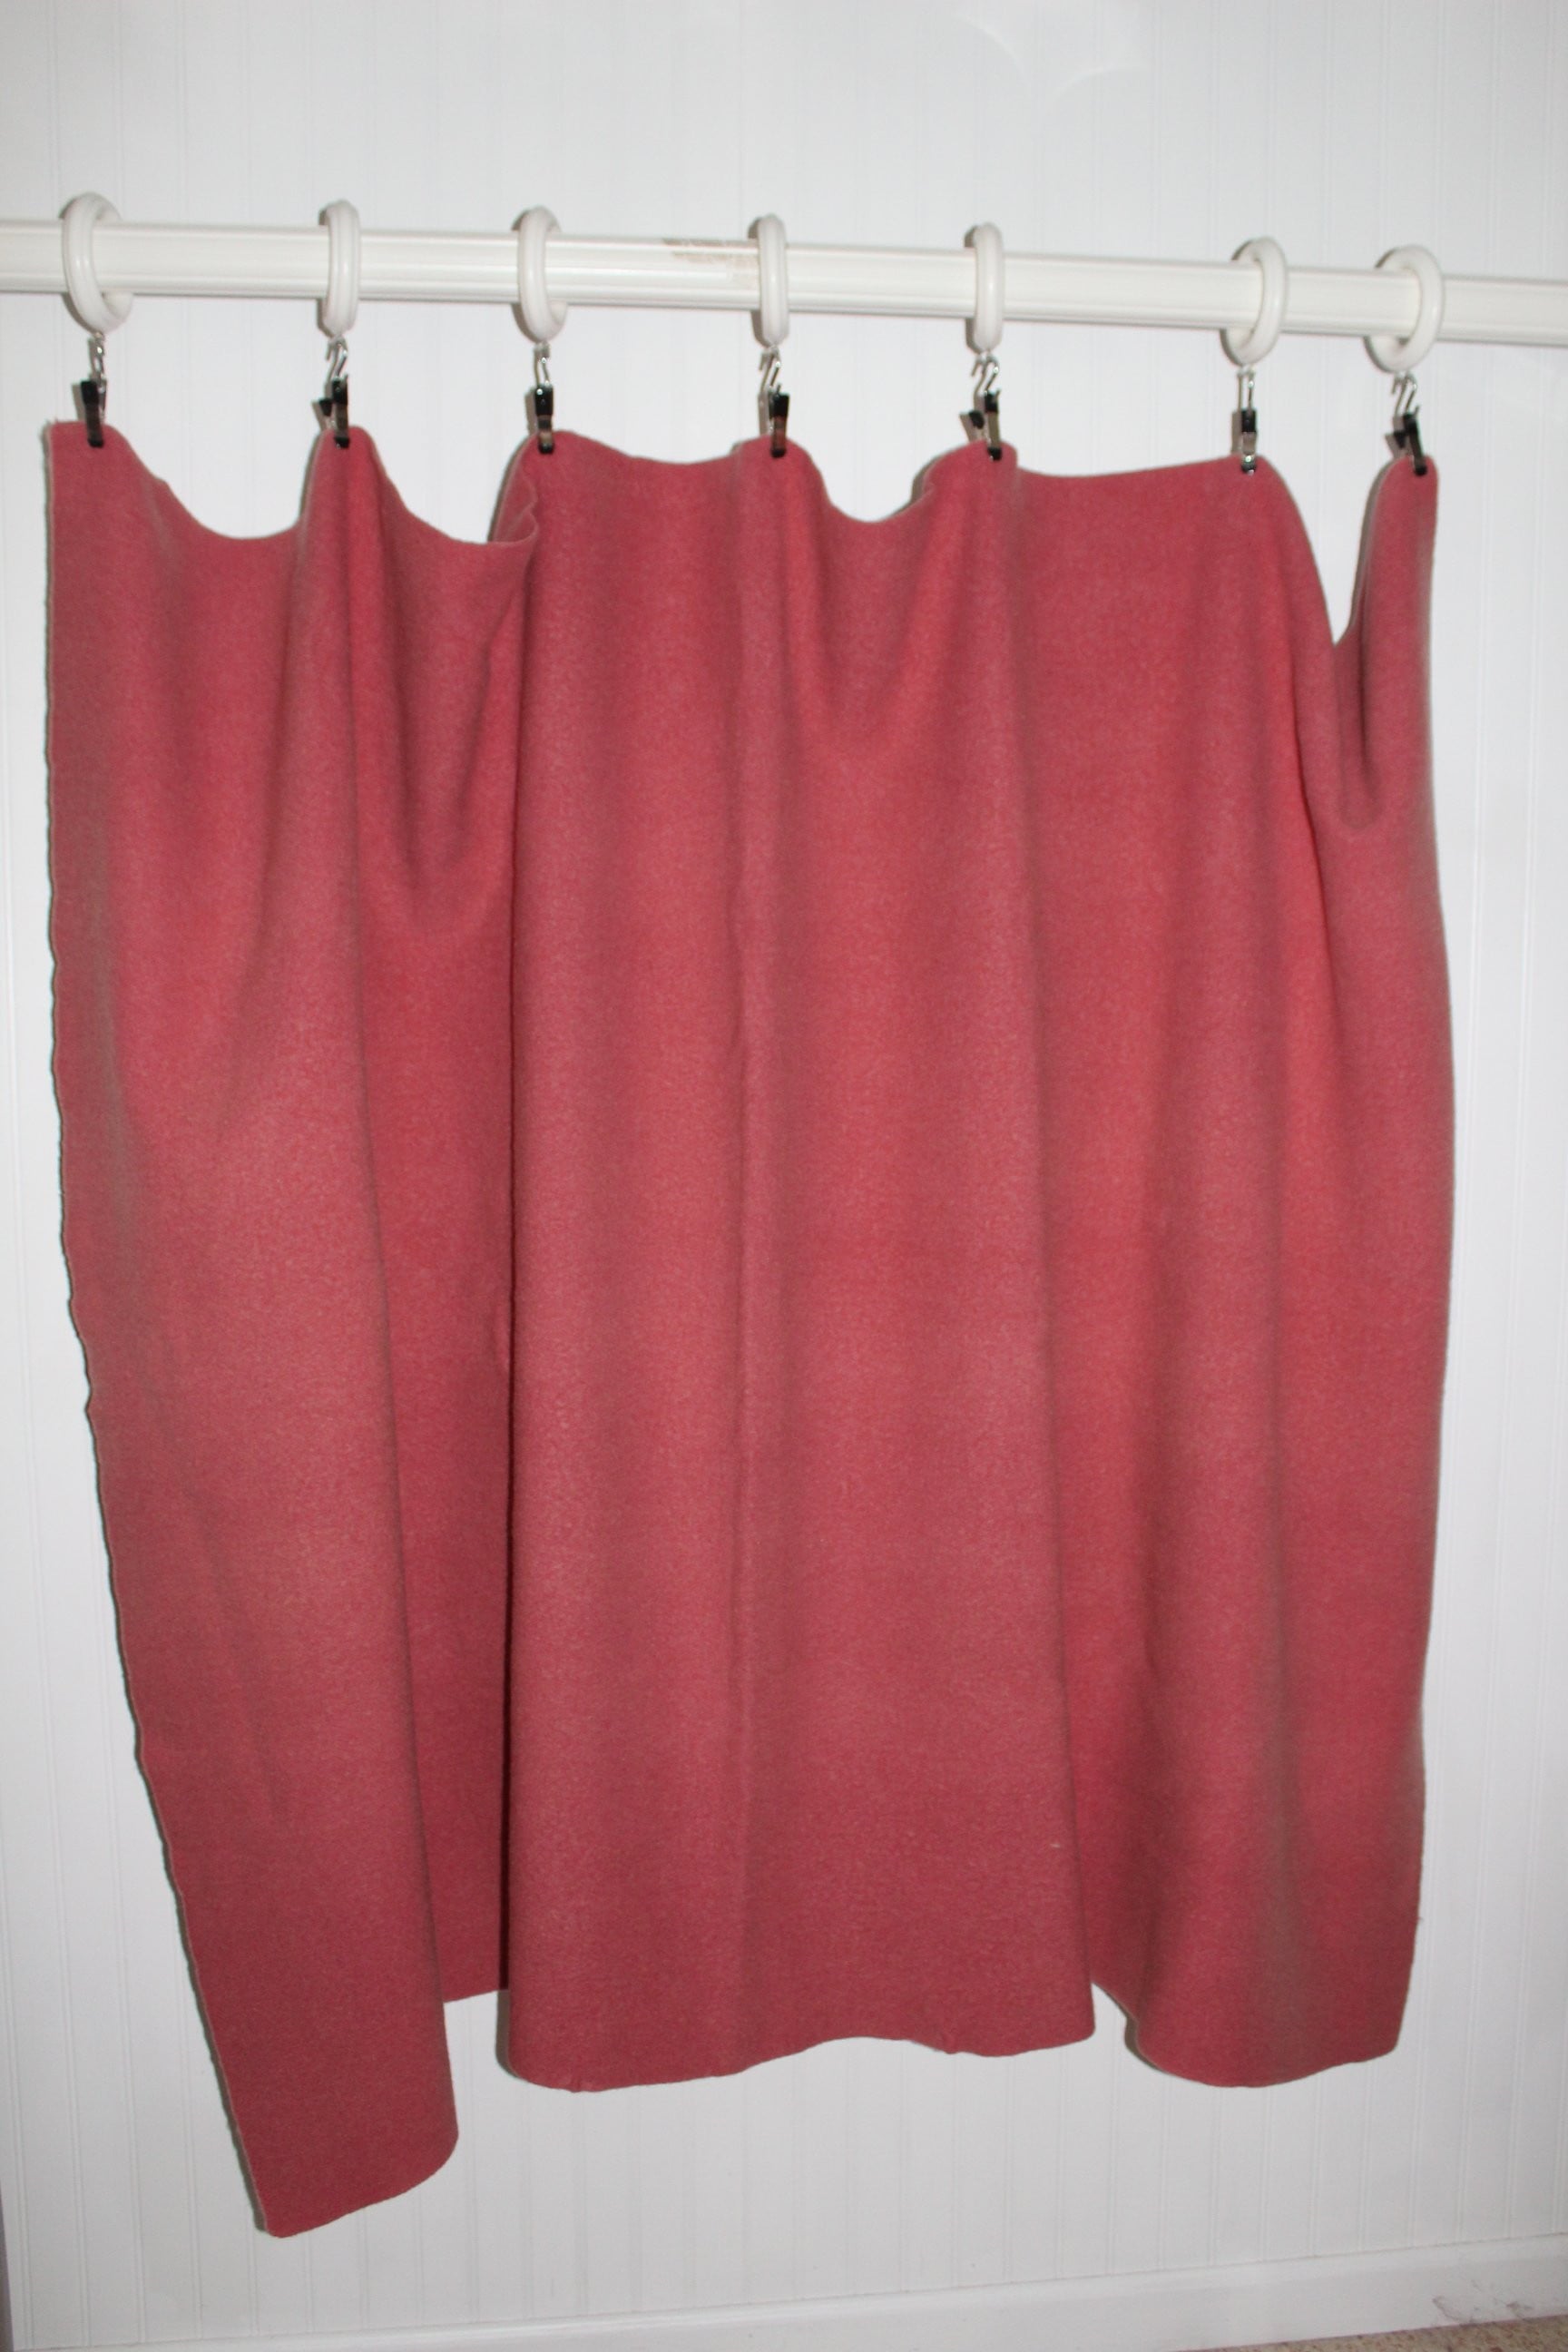 Unbranded Wool Blanket rose-colored 50" X 76" Vintage Bed Cover,  Very Heavy Wool 